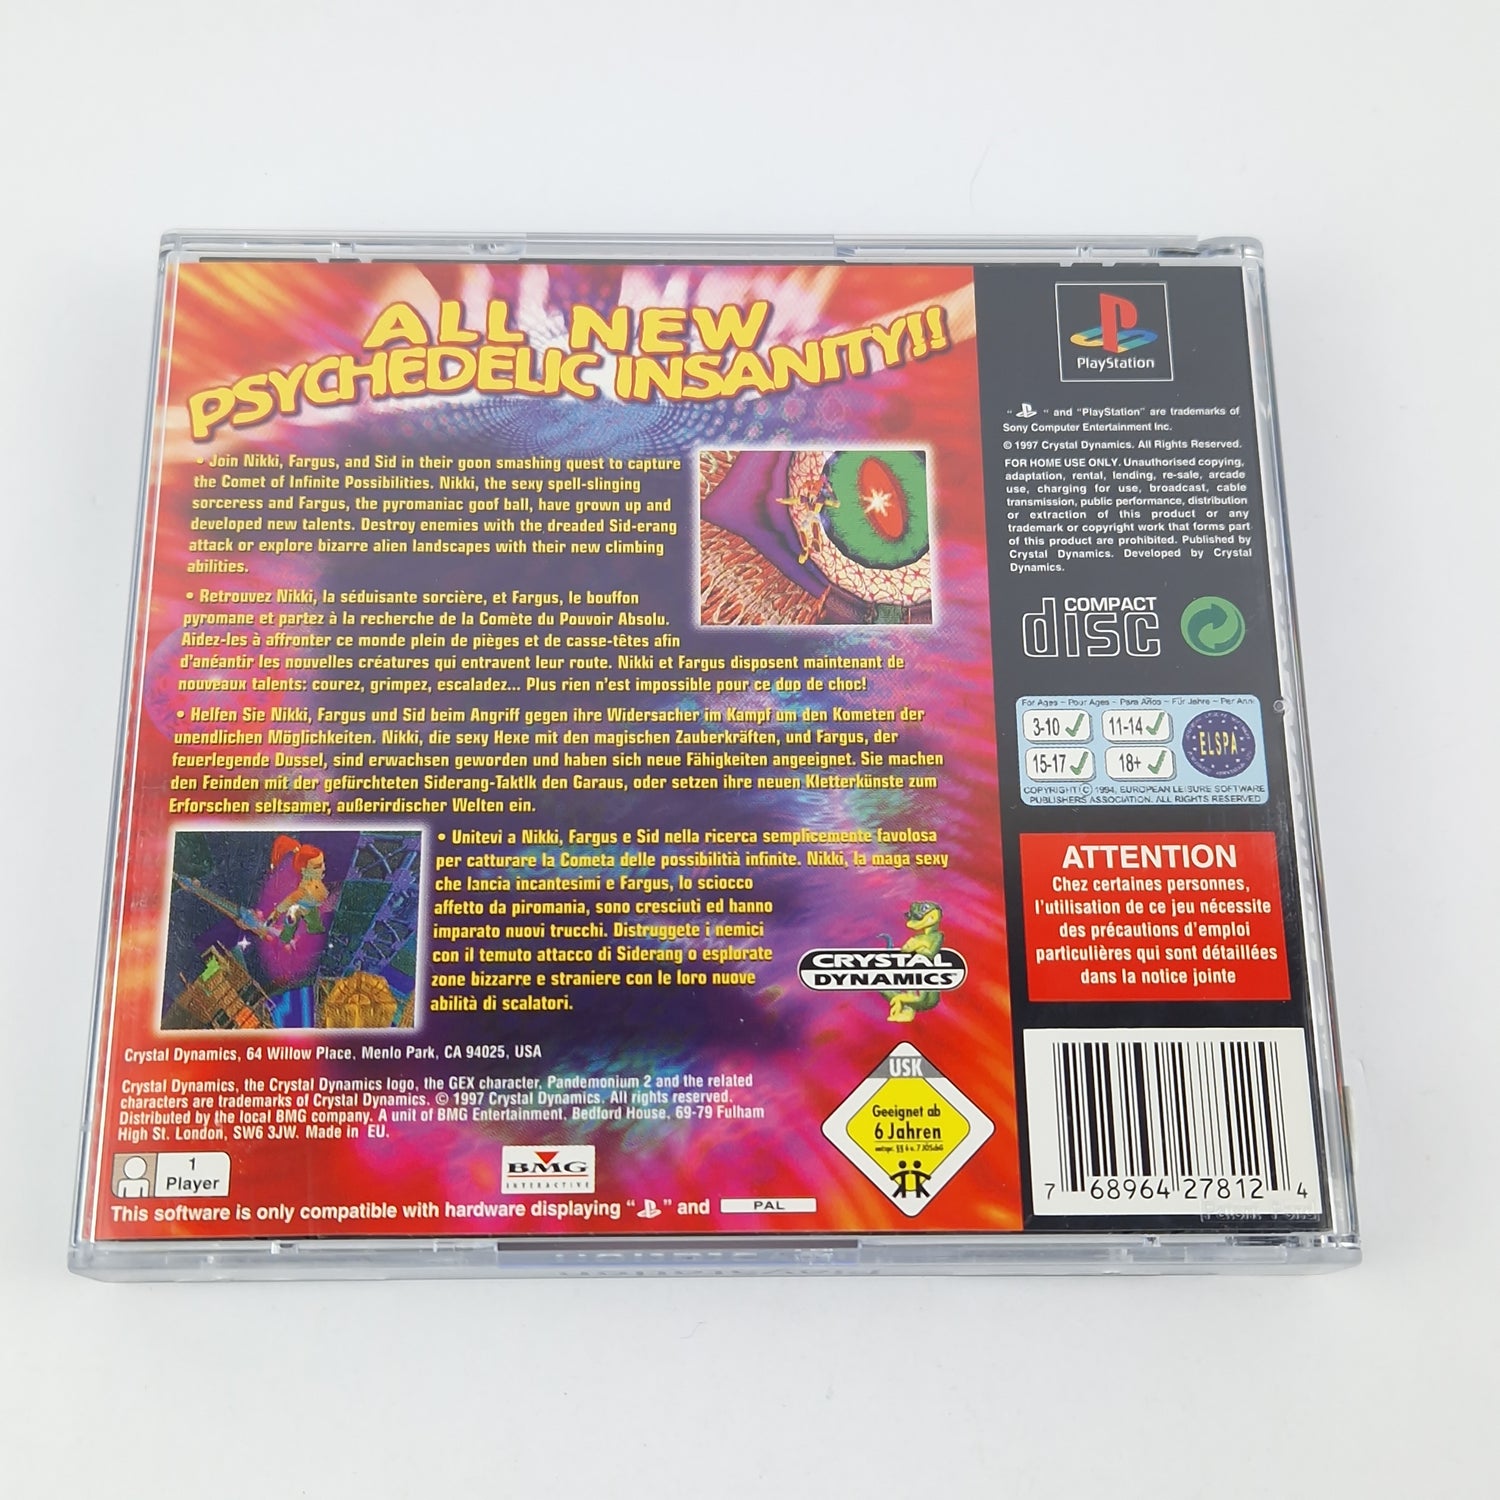 Playstation 1 game: Pandemonium 2 - CD instructions OVP SONY PS1 PSX PAL Konami